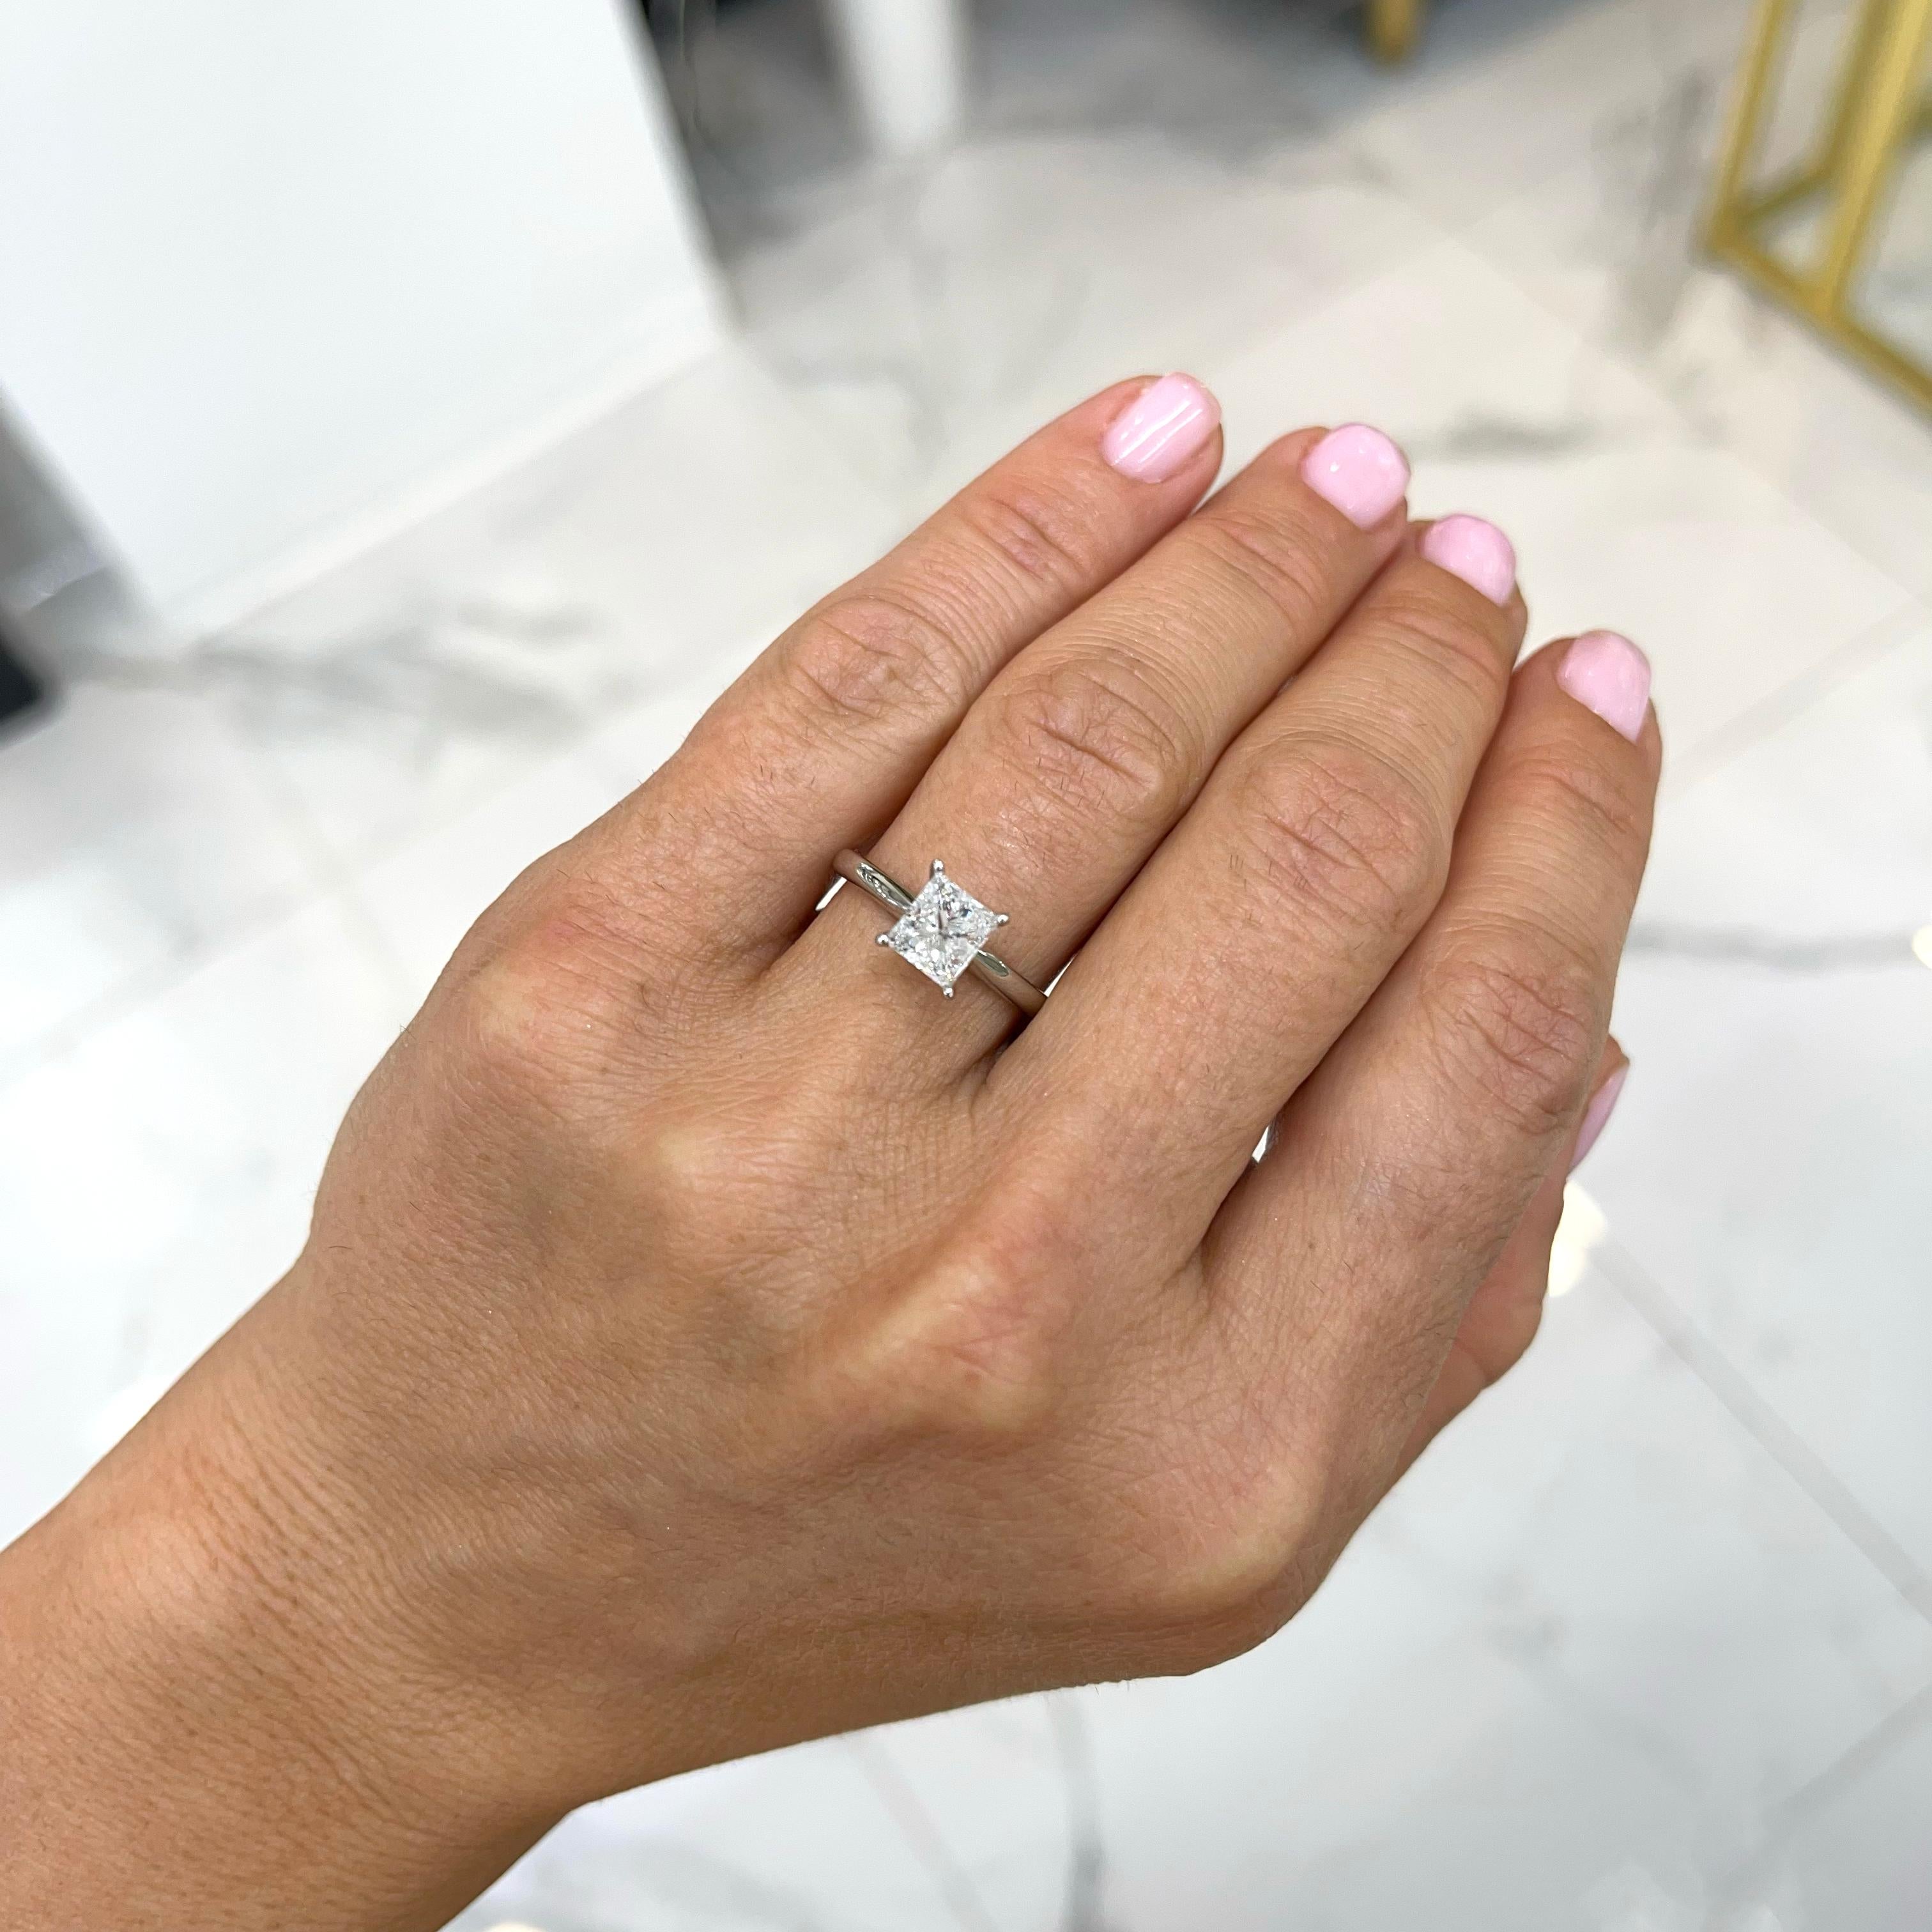 Ladies 10K White Gold Princess Cut Diamond Solitaire Engagement Ring 4